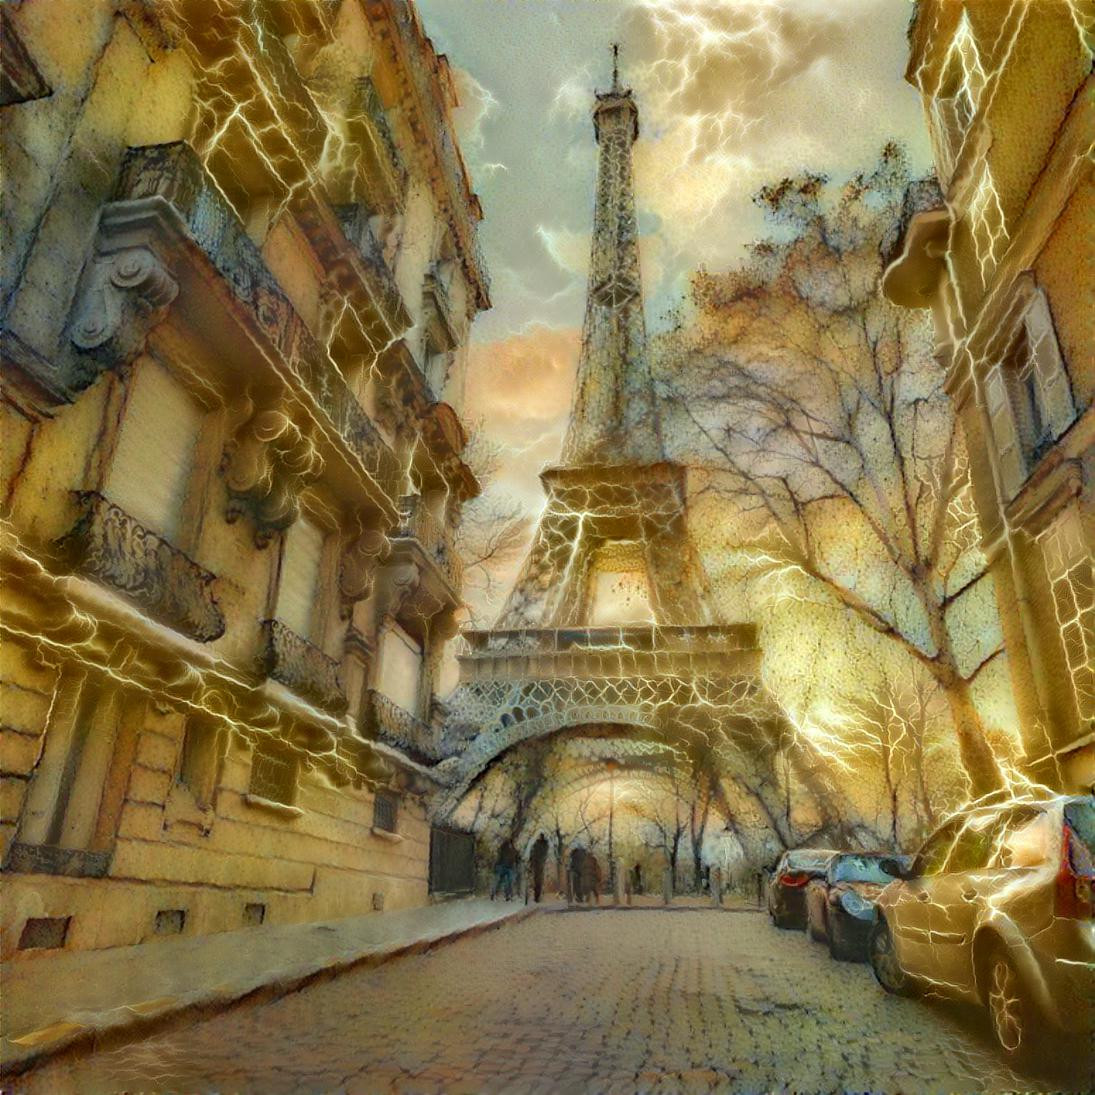 Eiffel Tower, Paris [1.2MP]